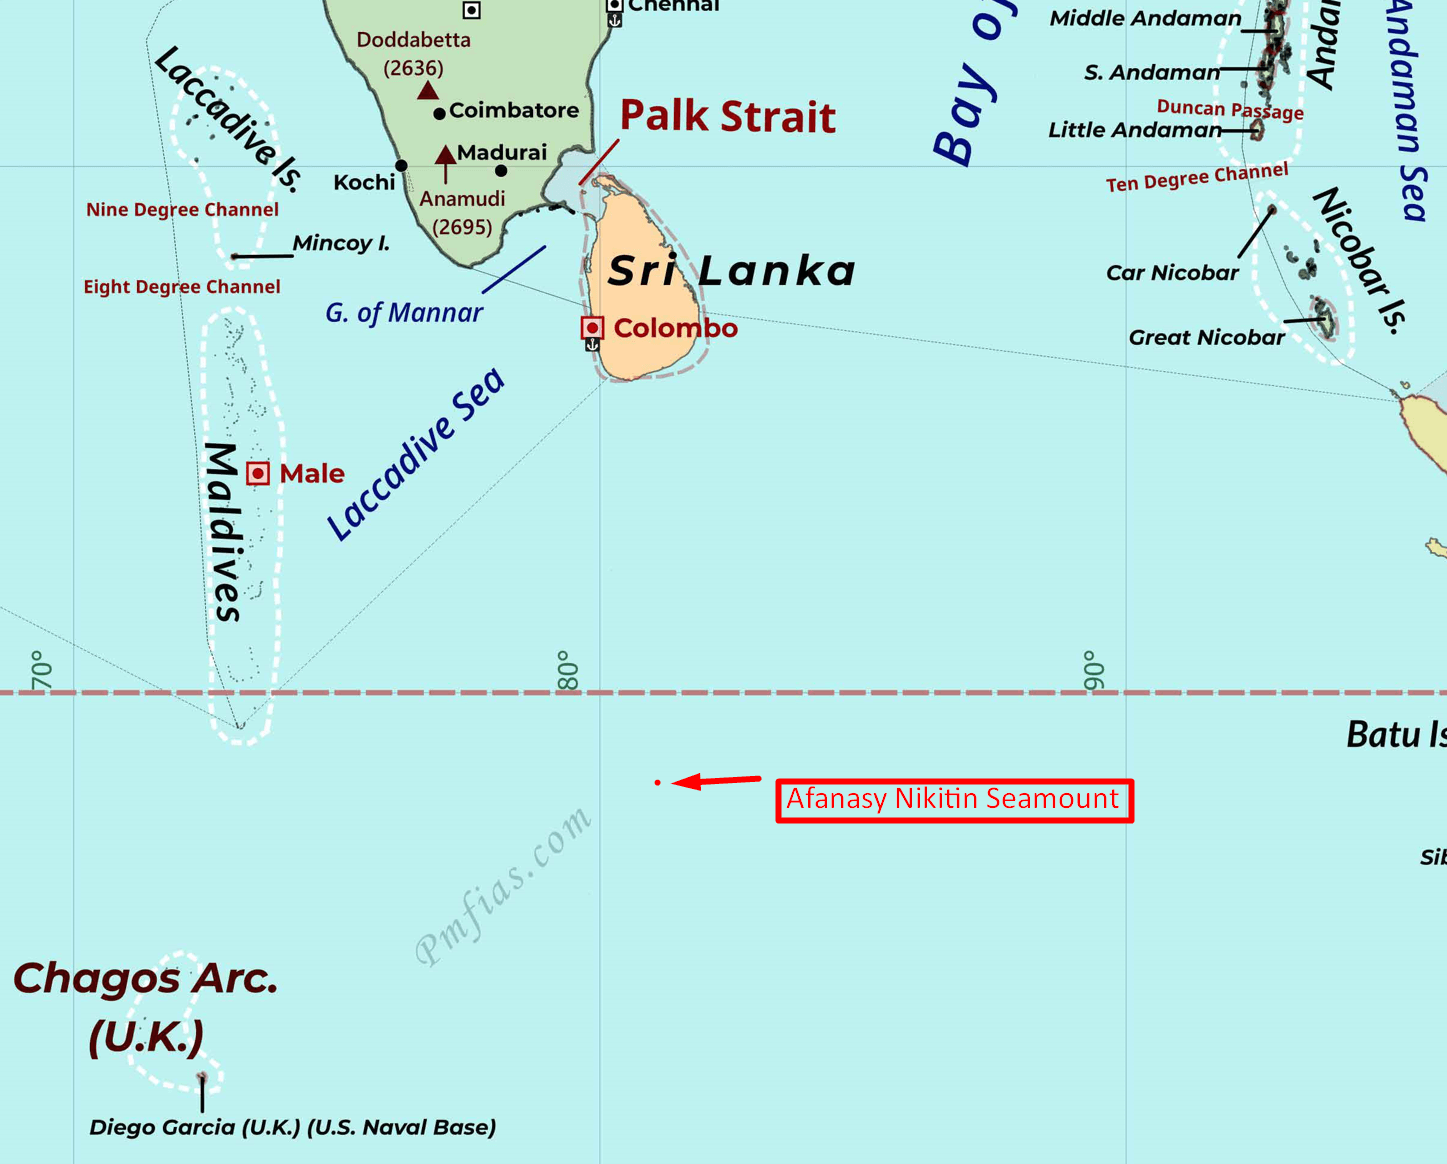 Afanasy Nikitin Seamount MAP - PMF IAS